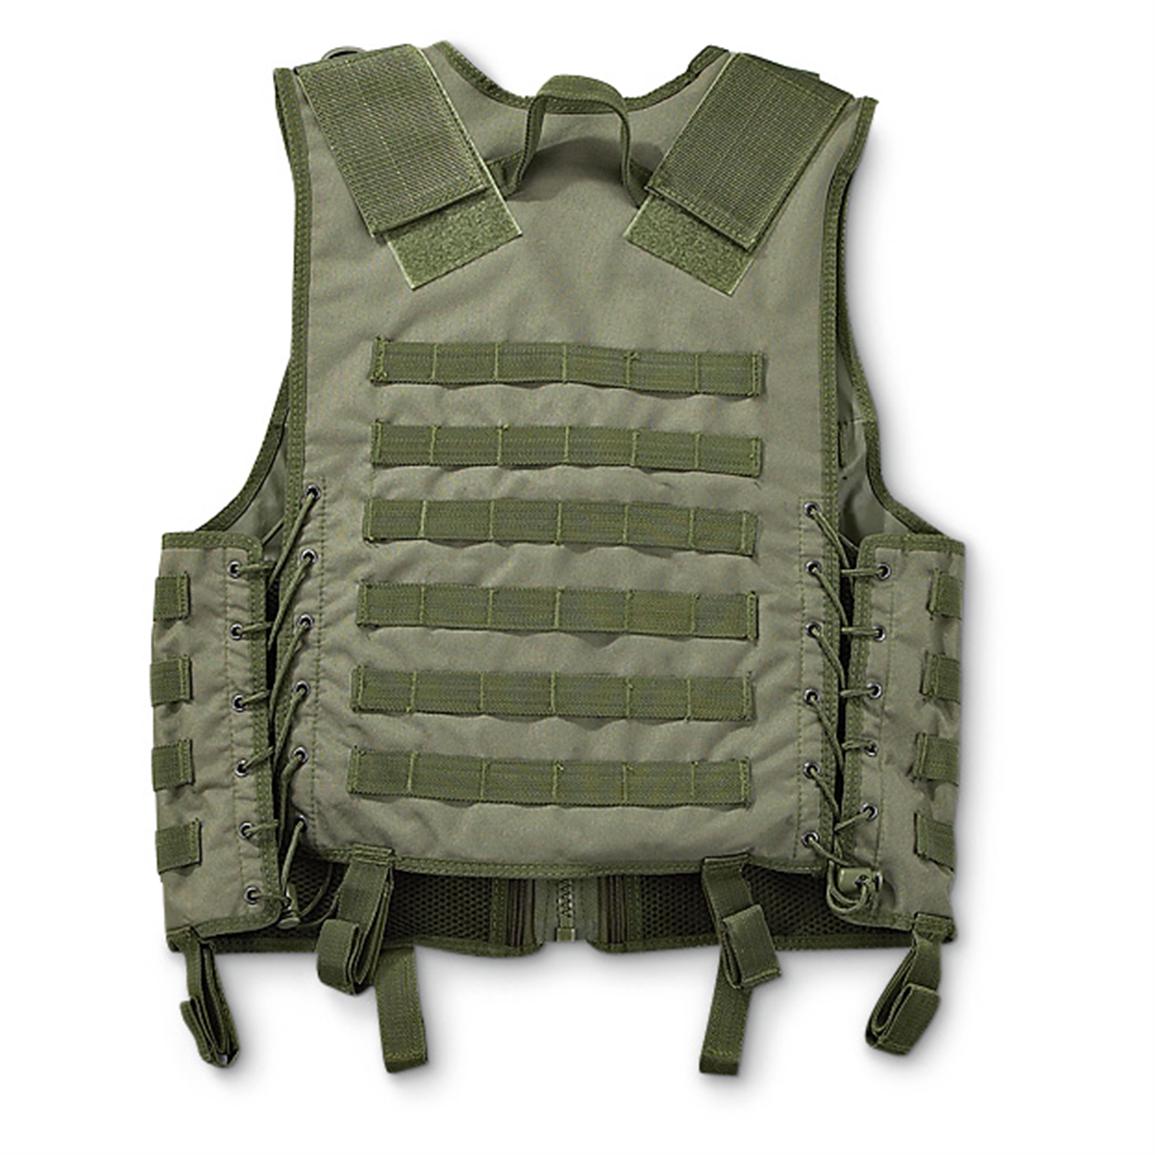 Military-style M.O.L.L.E. Tactical Vest - 152652, Vests at Sportsman's